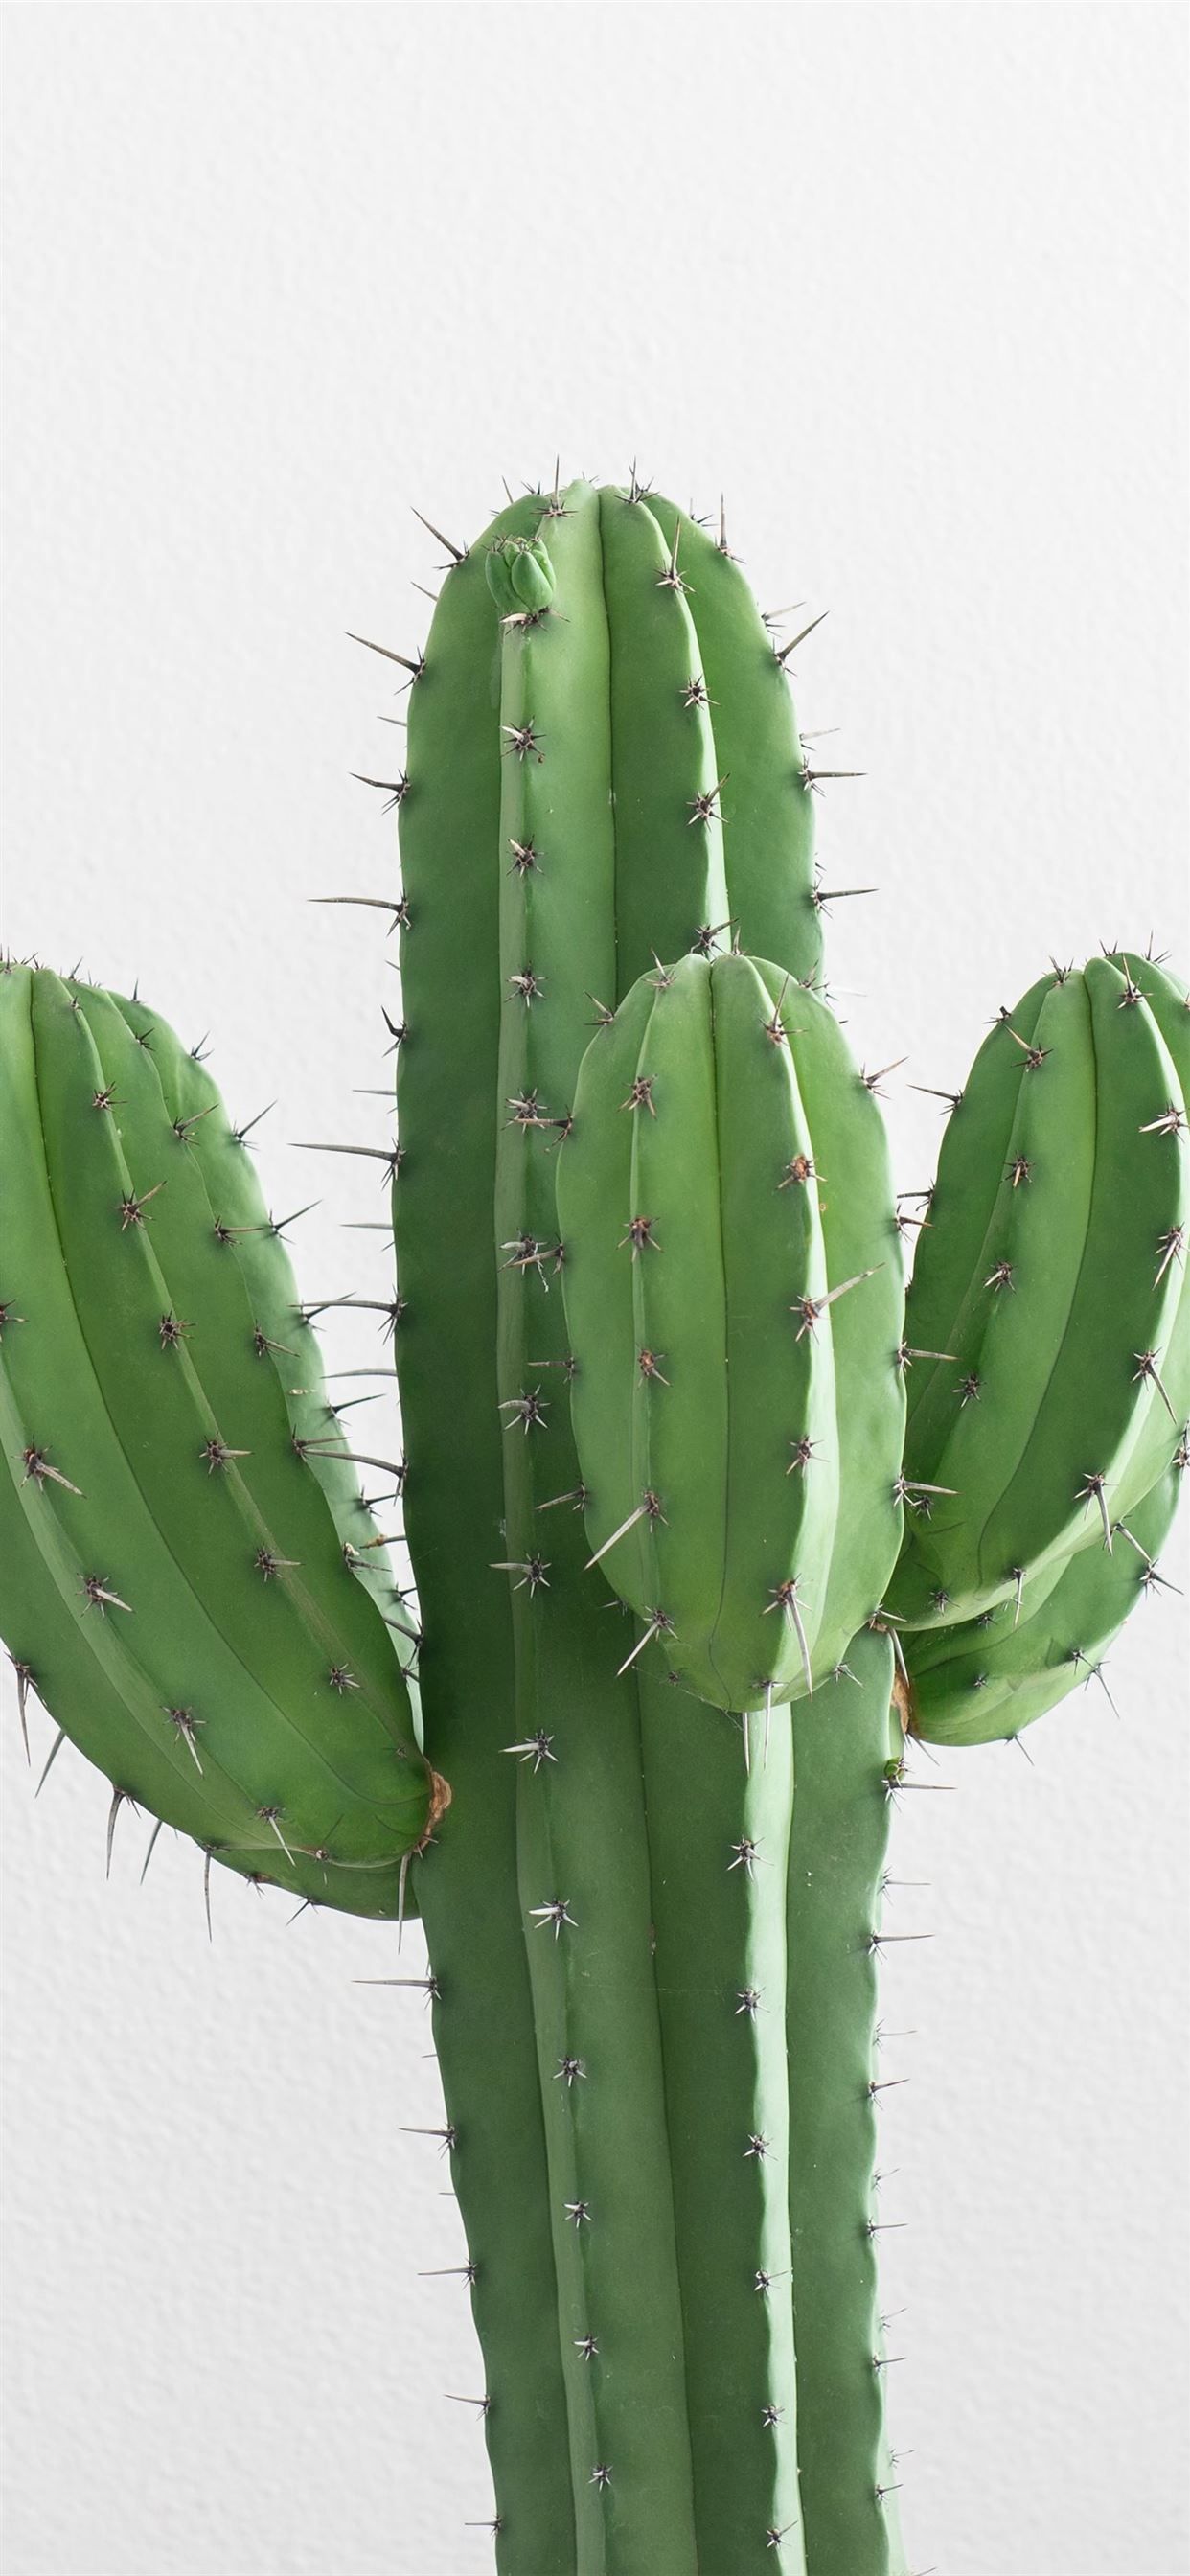 cactus plant iPhone 11 Wallpaper Free Download